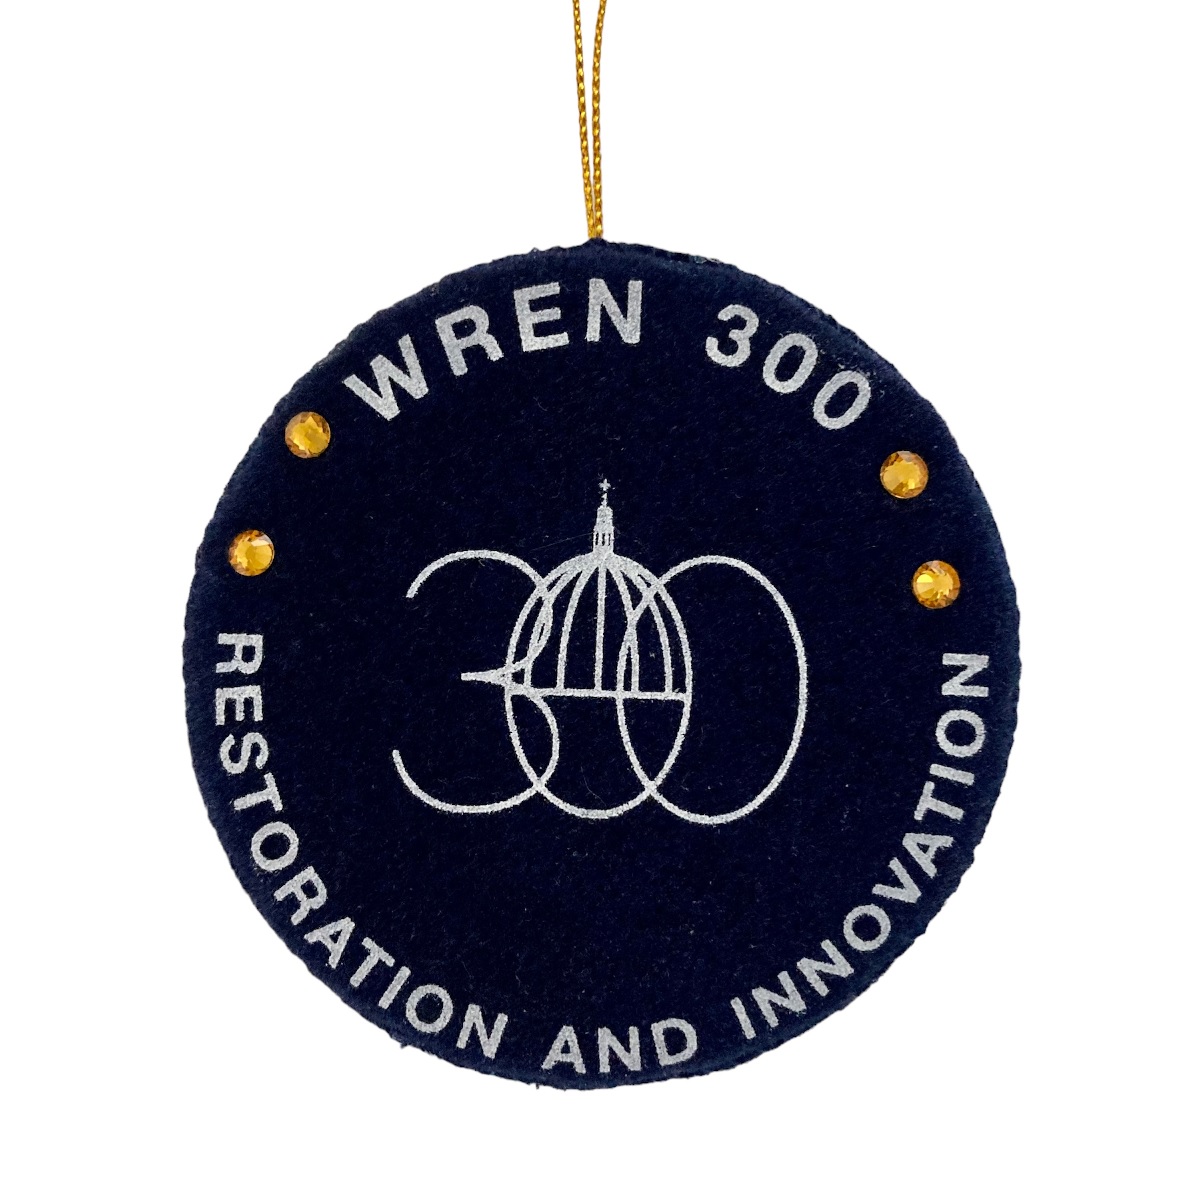 Wren300 Roundel Decoration Limited Edition